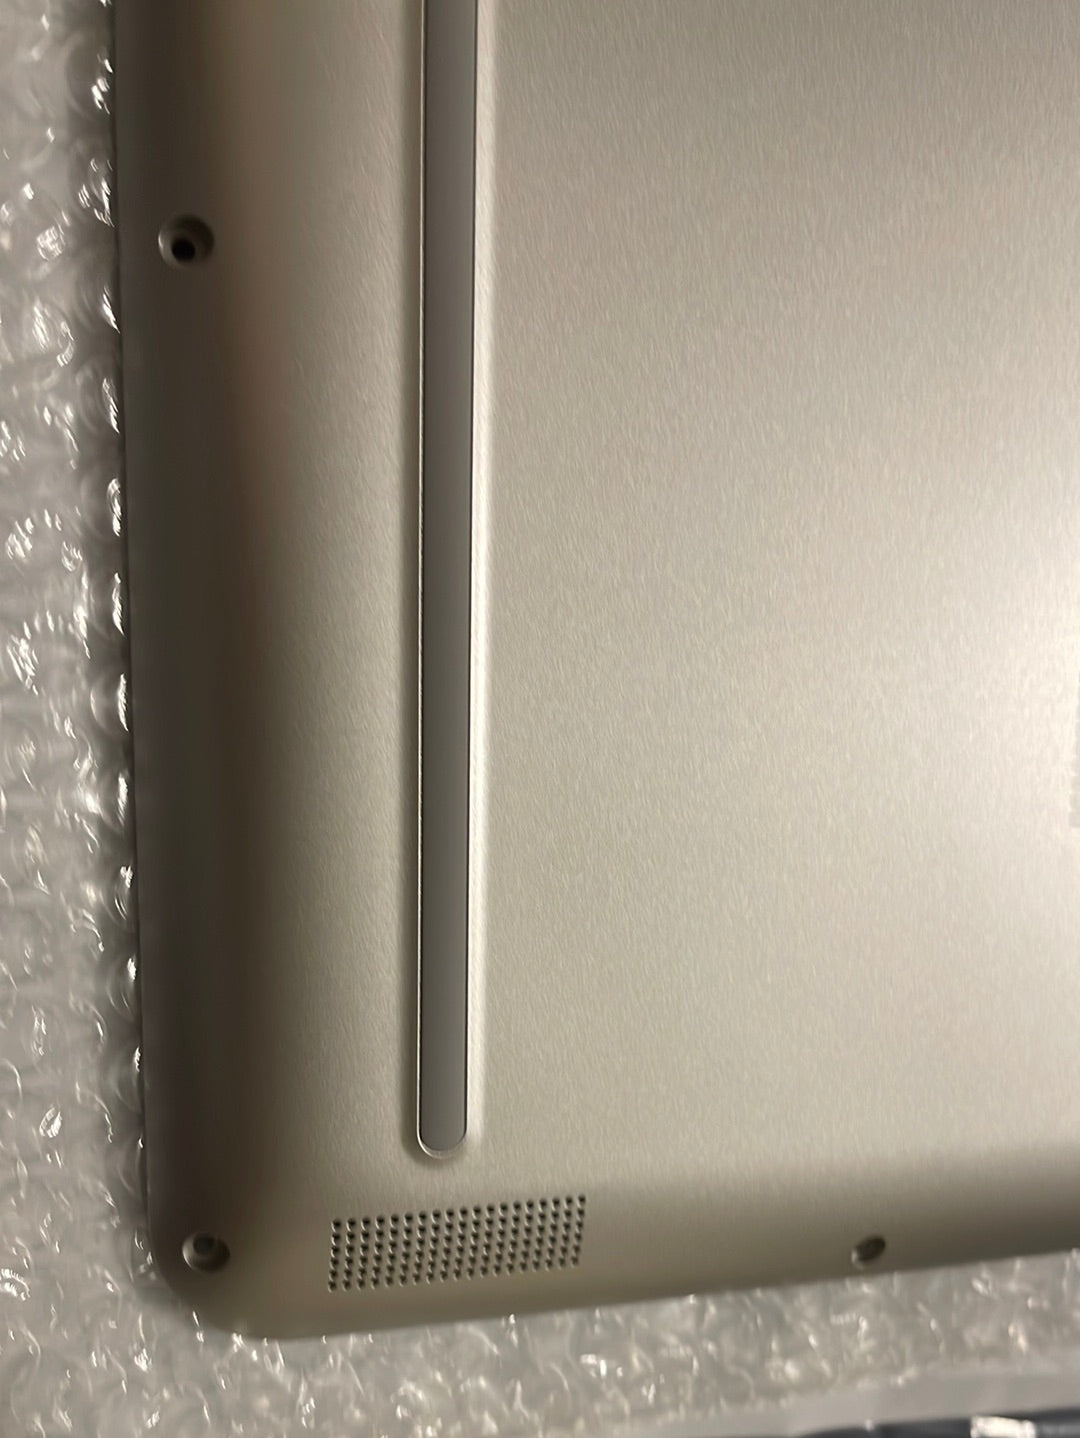 New Hp Laptop Bottom base part no: 818730-001